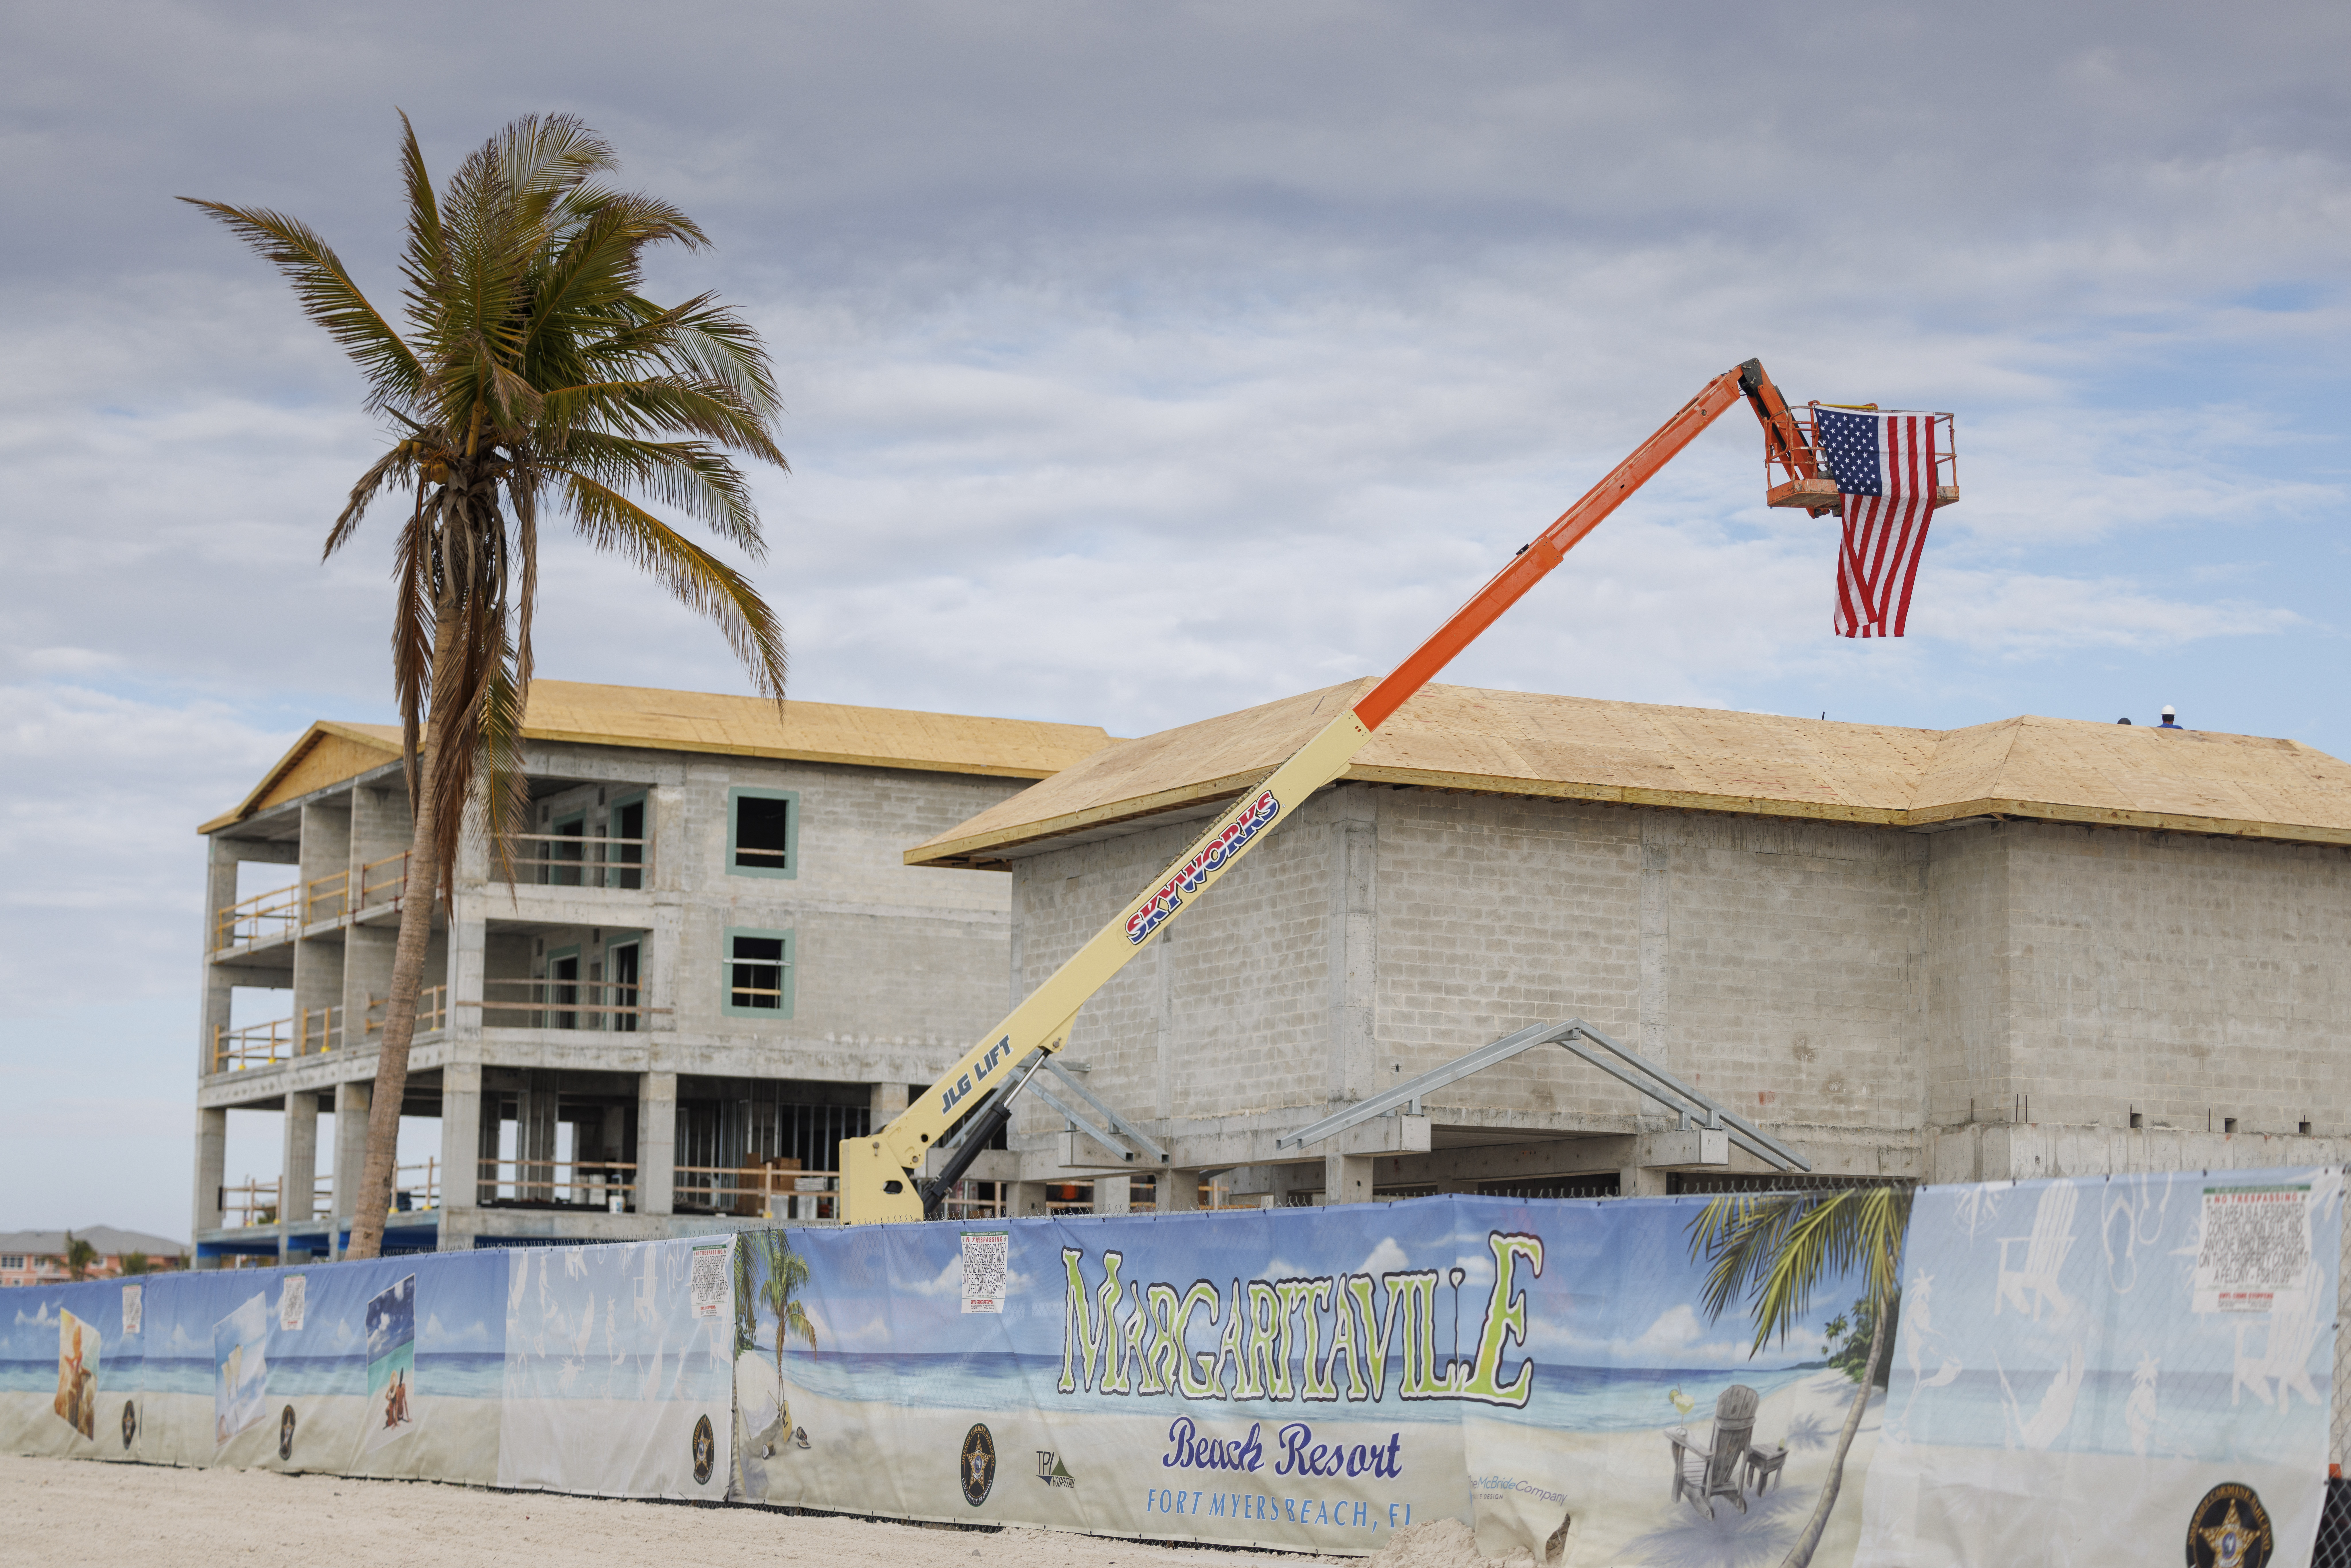 Margaritaville construction on Fort Myers Beach